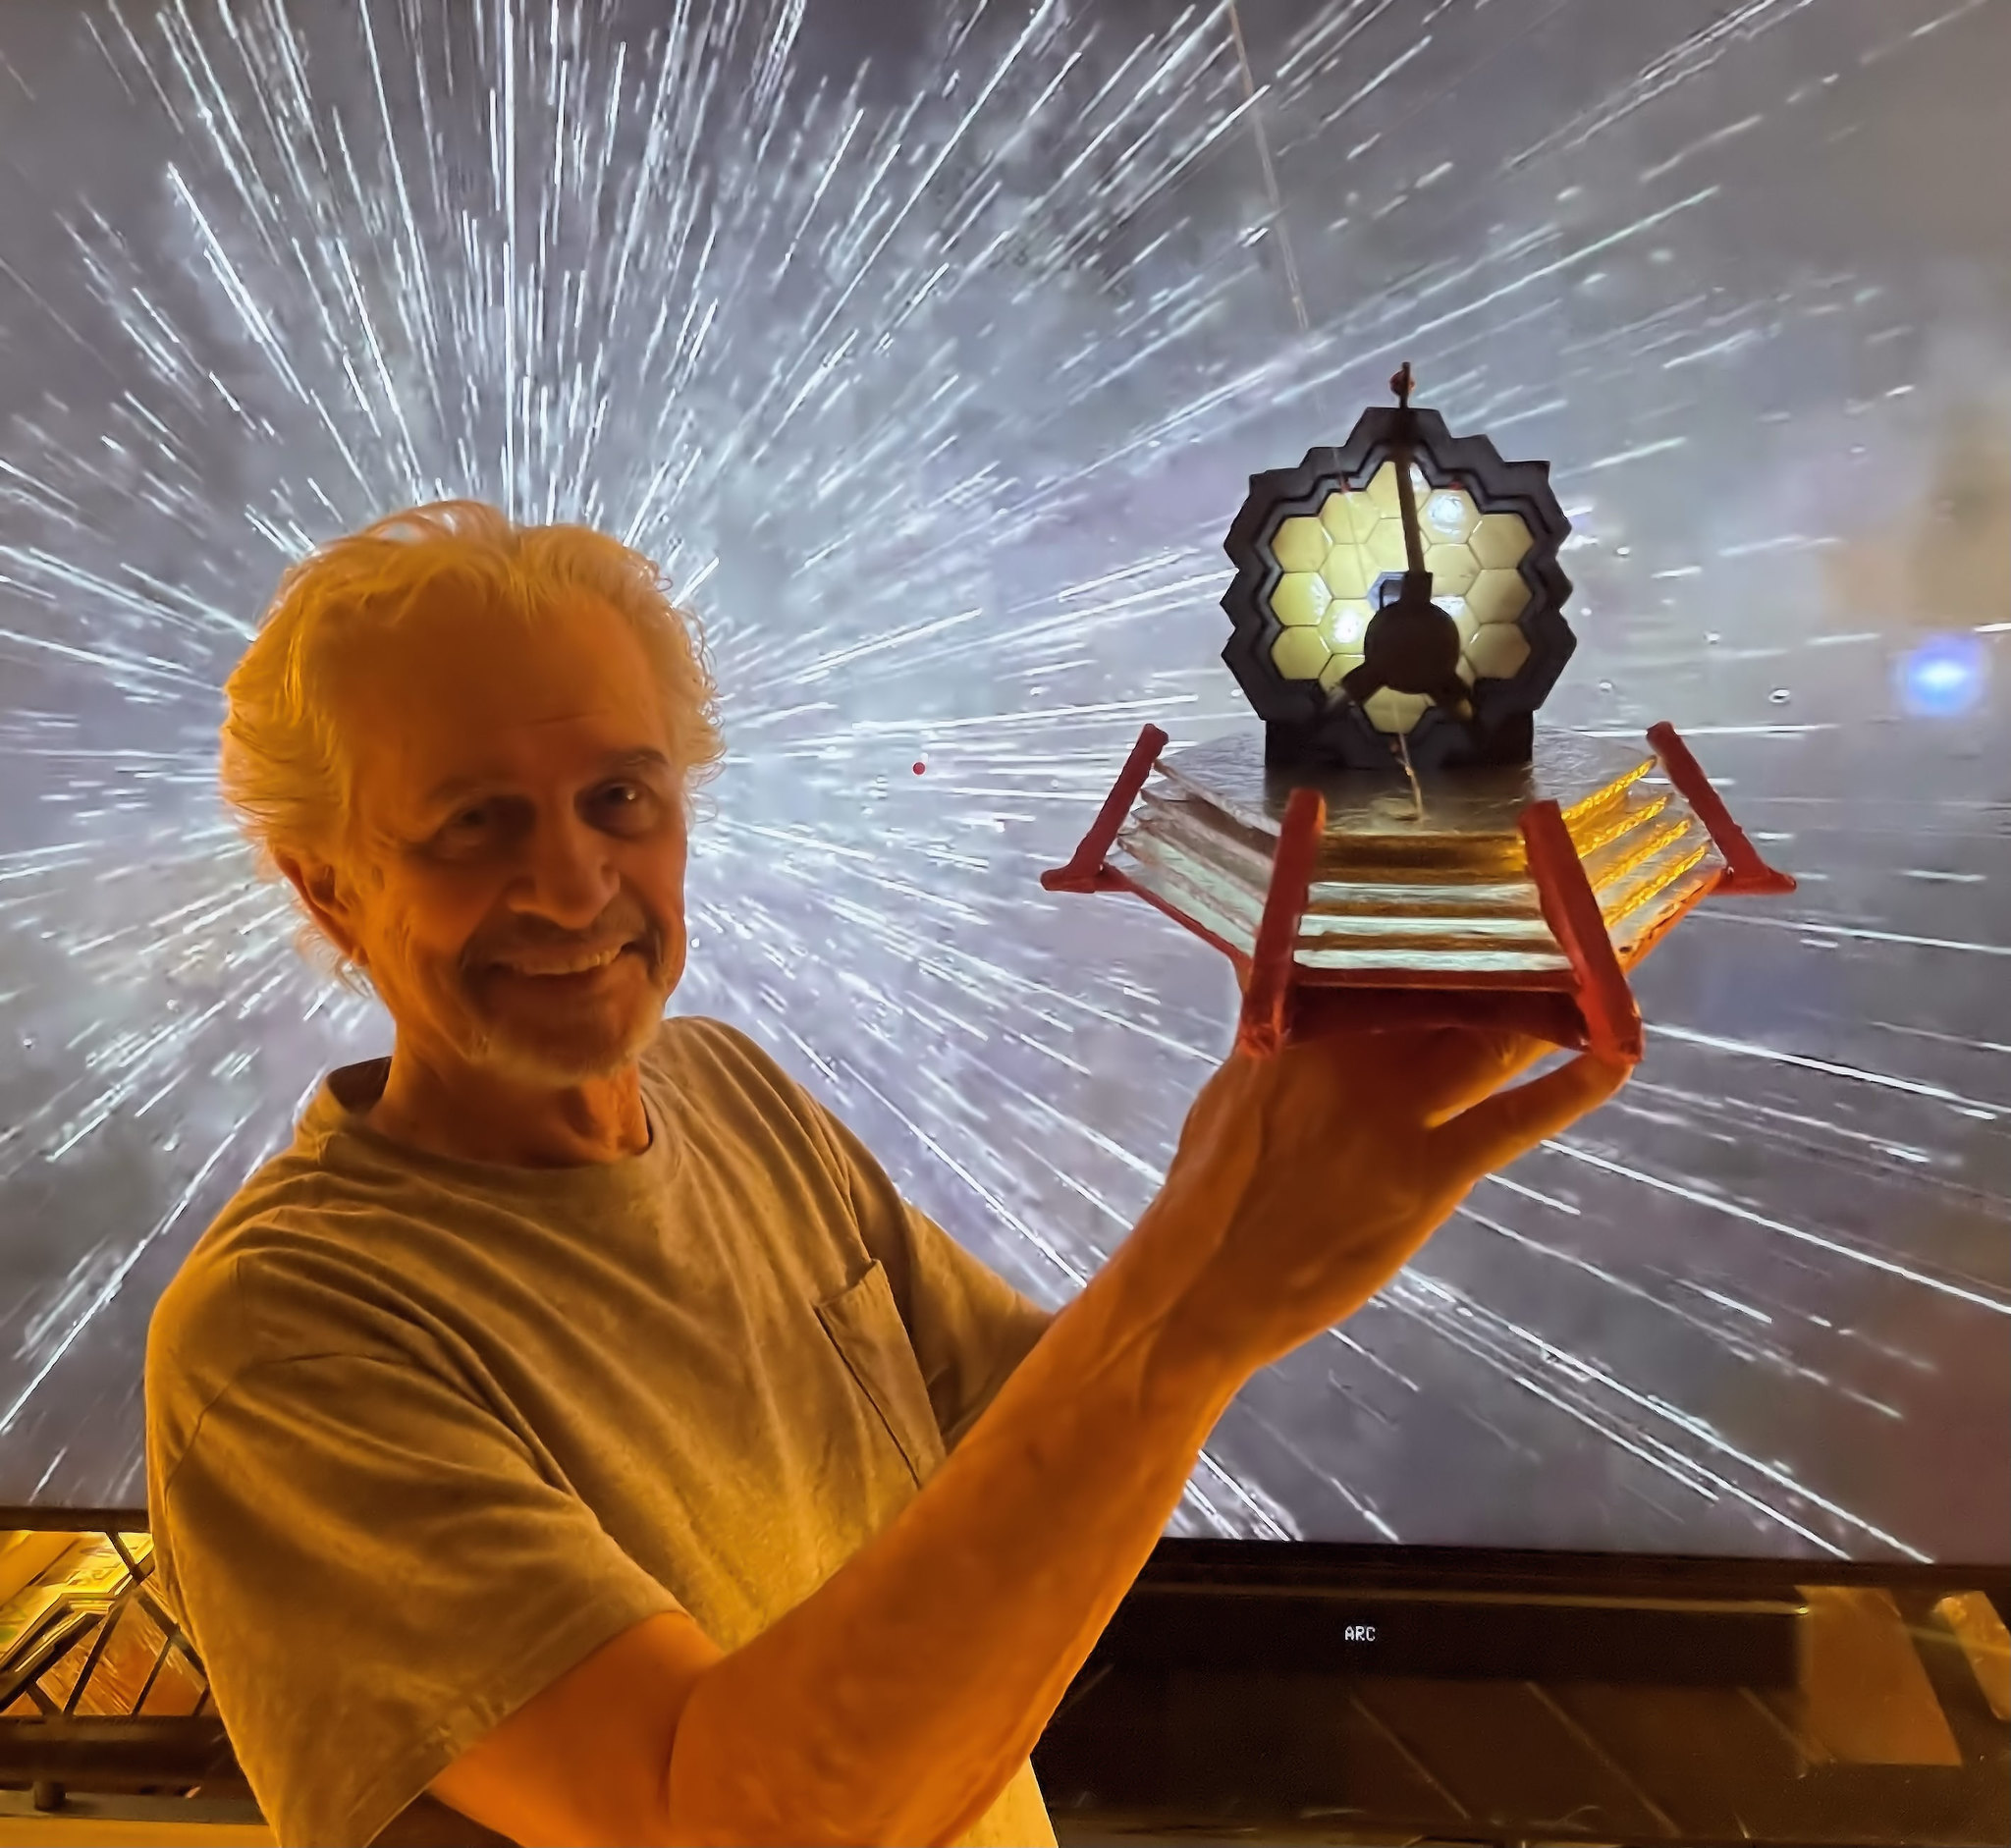 An older gentleman holds a model of JWST he built in front a screen radiating light beams.